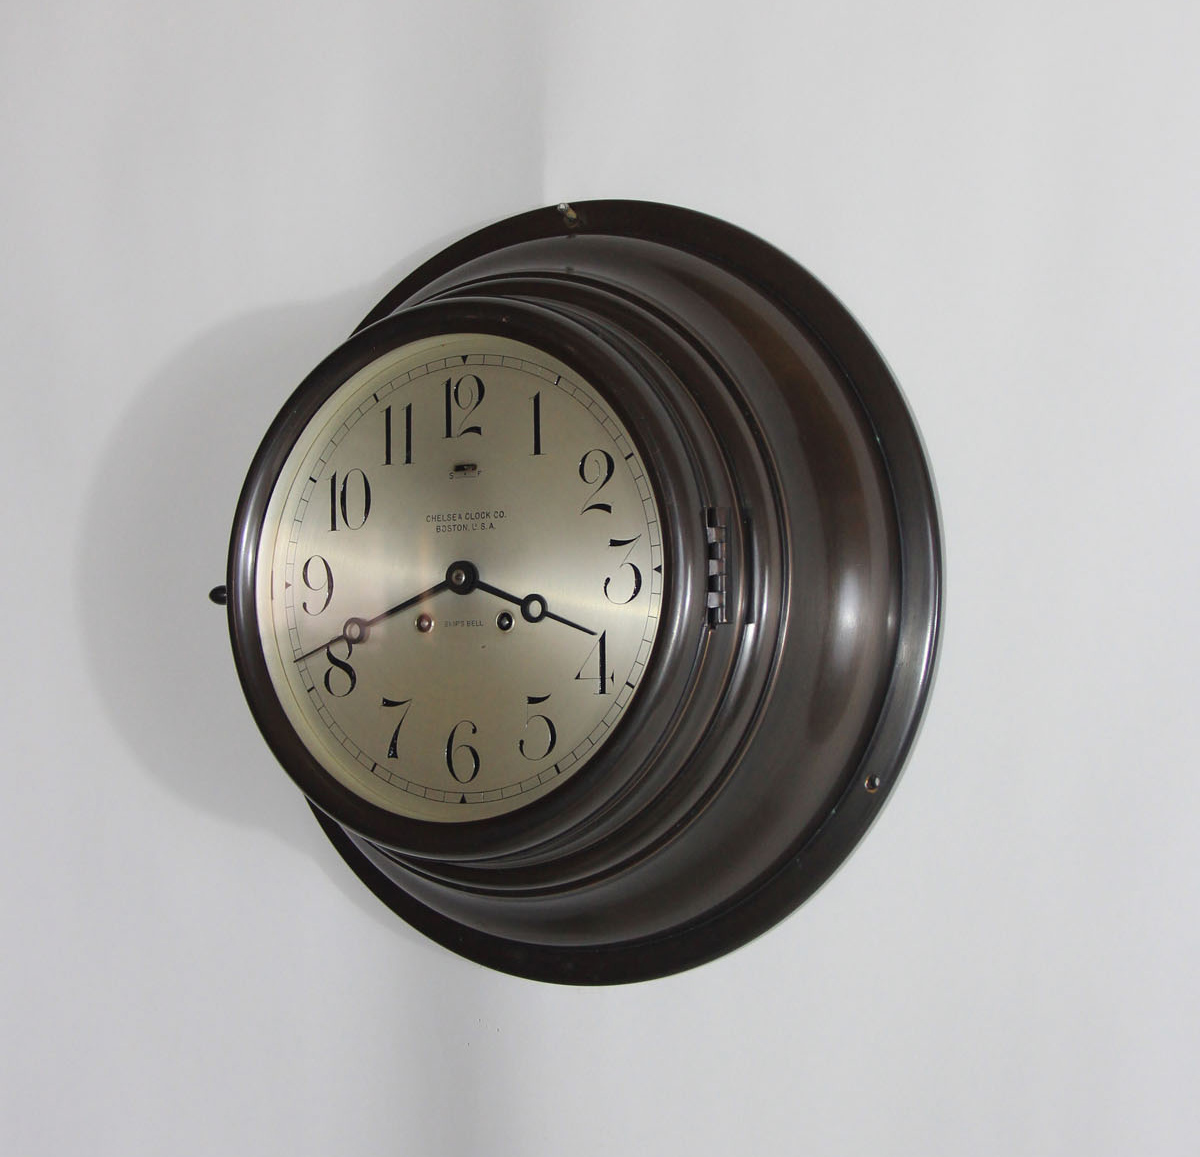 Chelsea 8 1/2 inch Wardroom Clock - Ships Bell